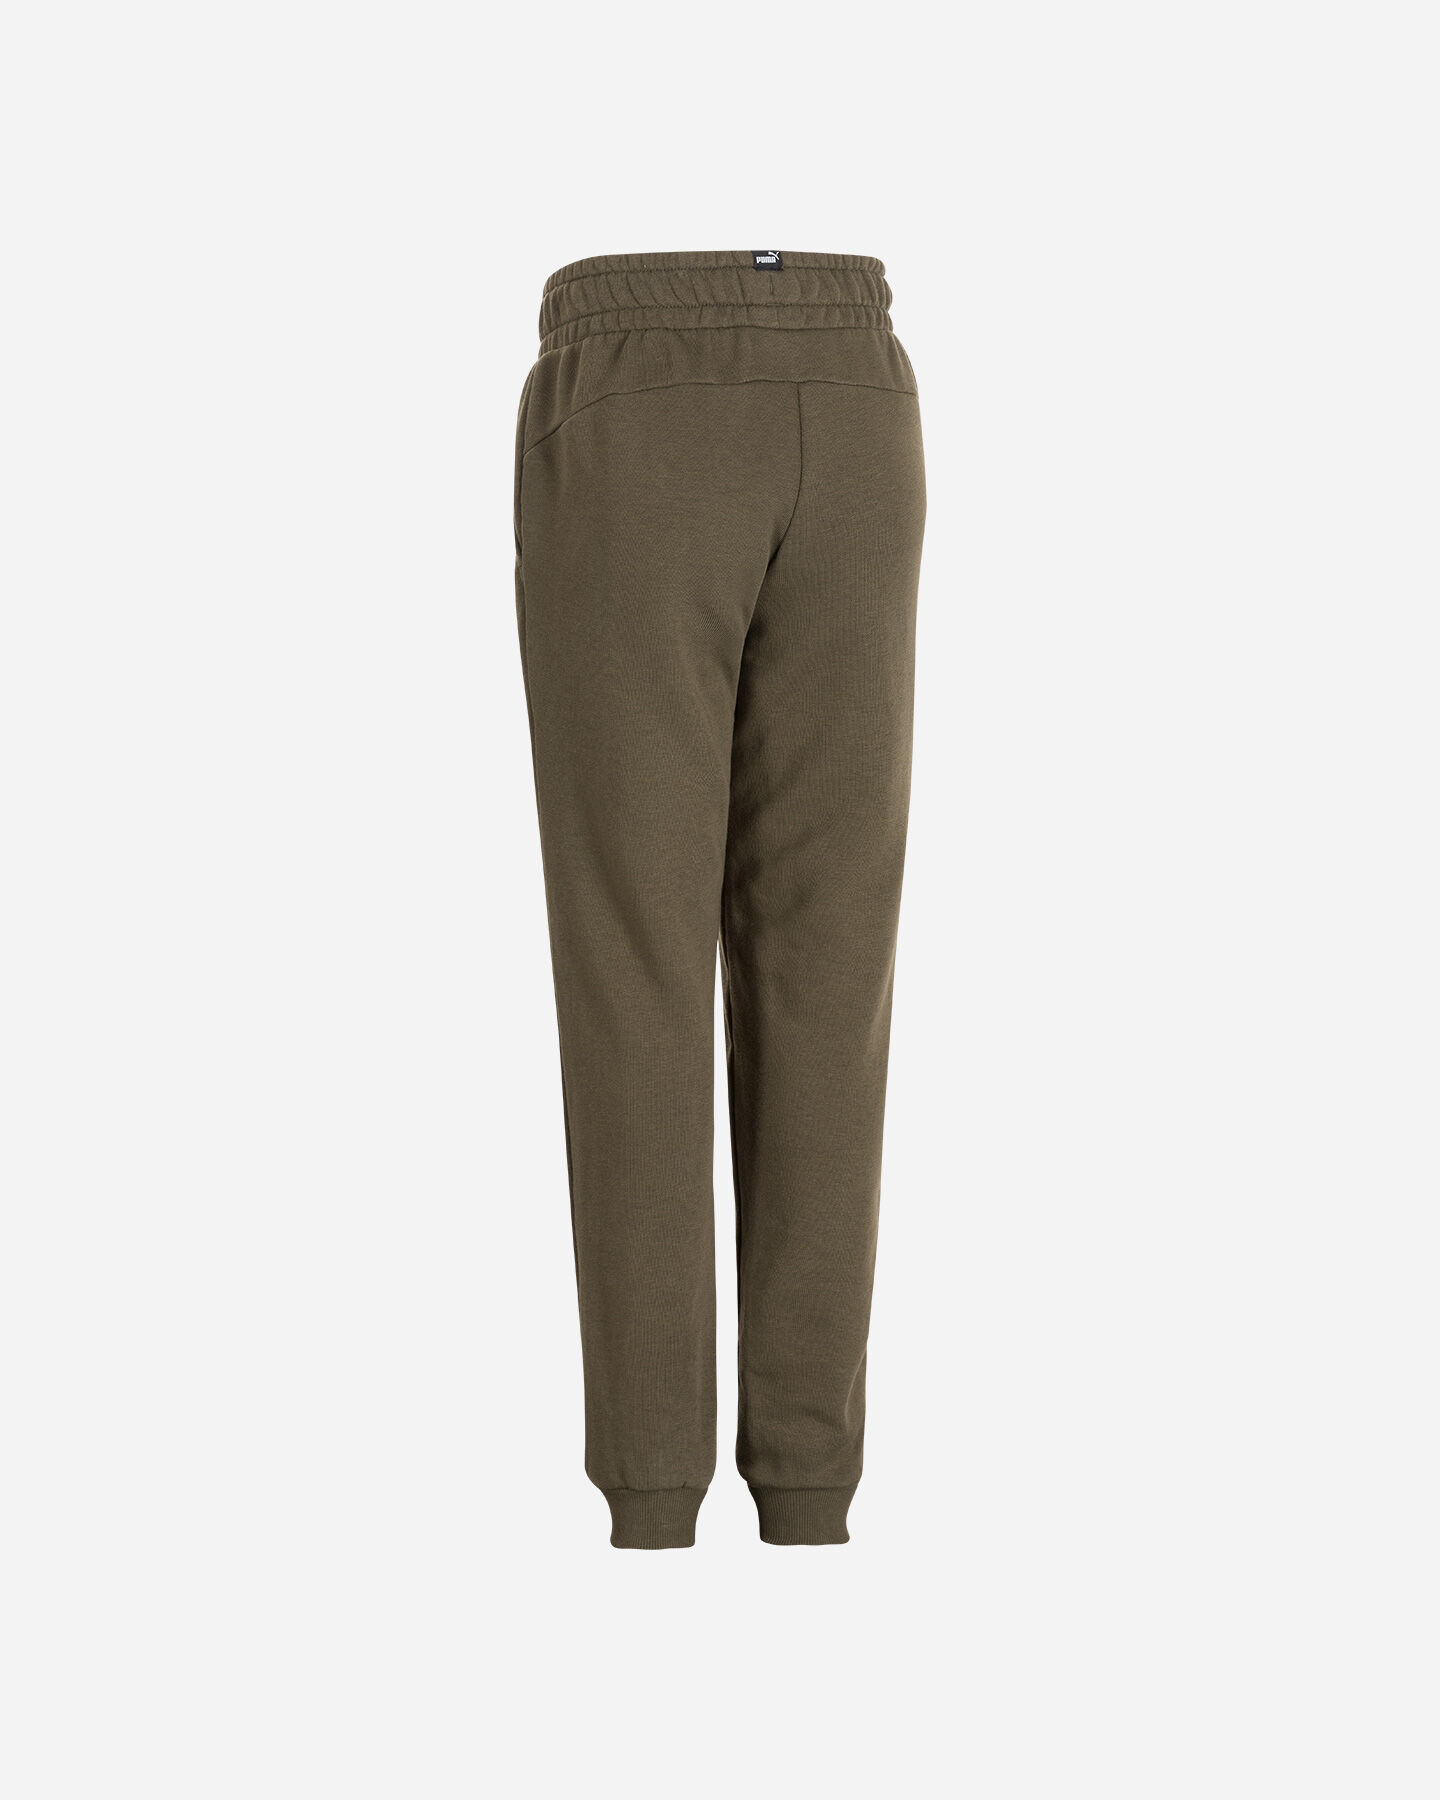  Pantalone PUMA BASIC JR S5339160|44|104 scatto 1